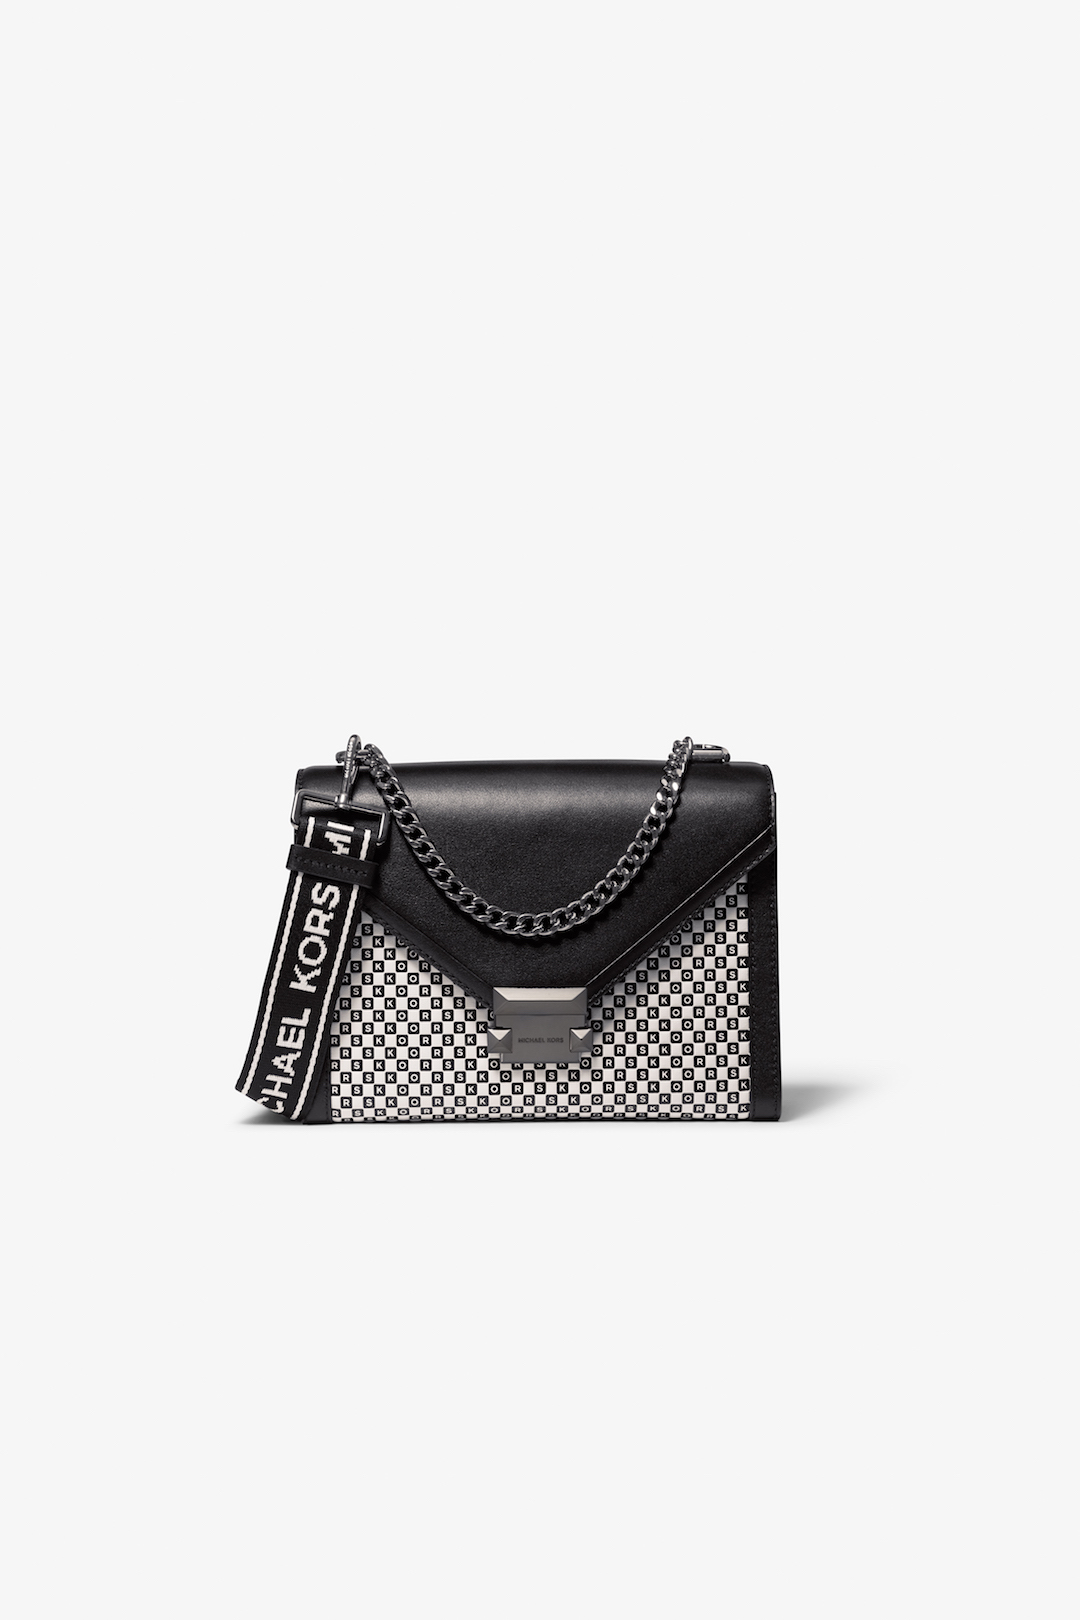 MICHAEL Michael Kors Checkered Leather Whitney Shoulder Bag.jpg